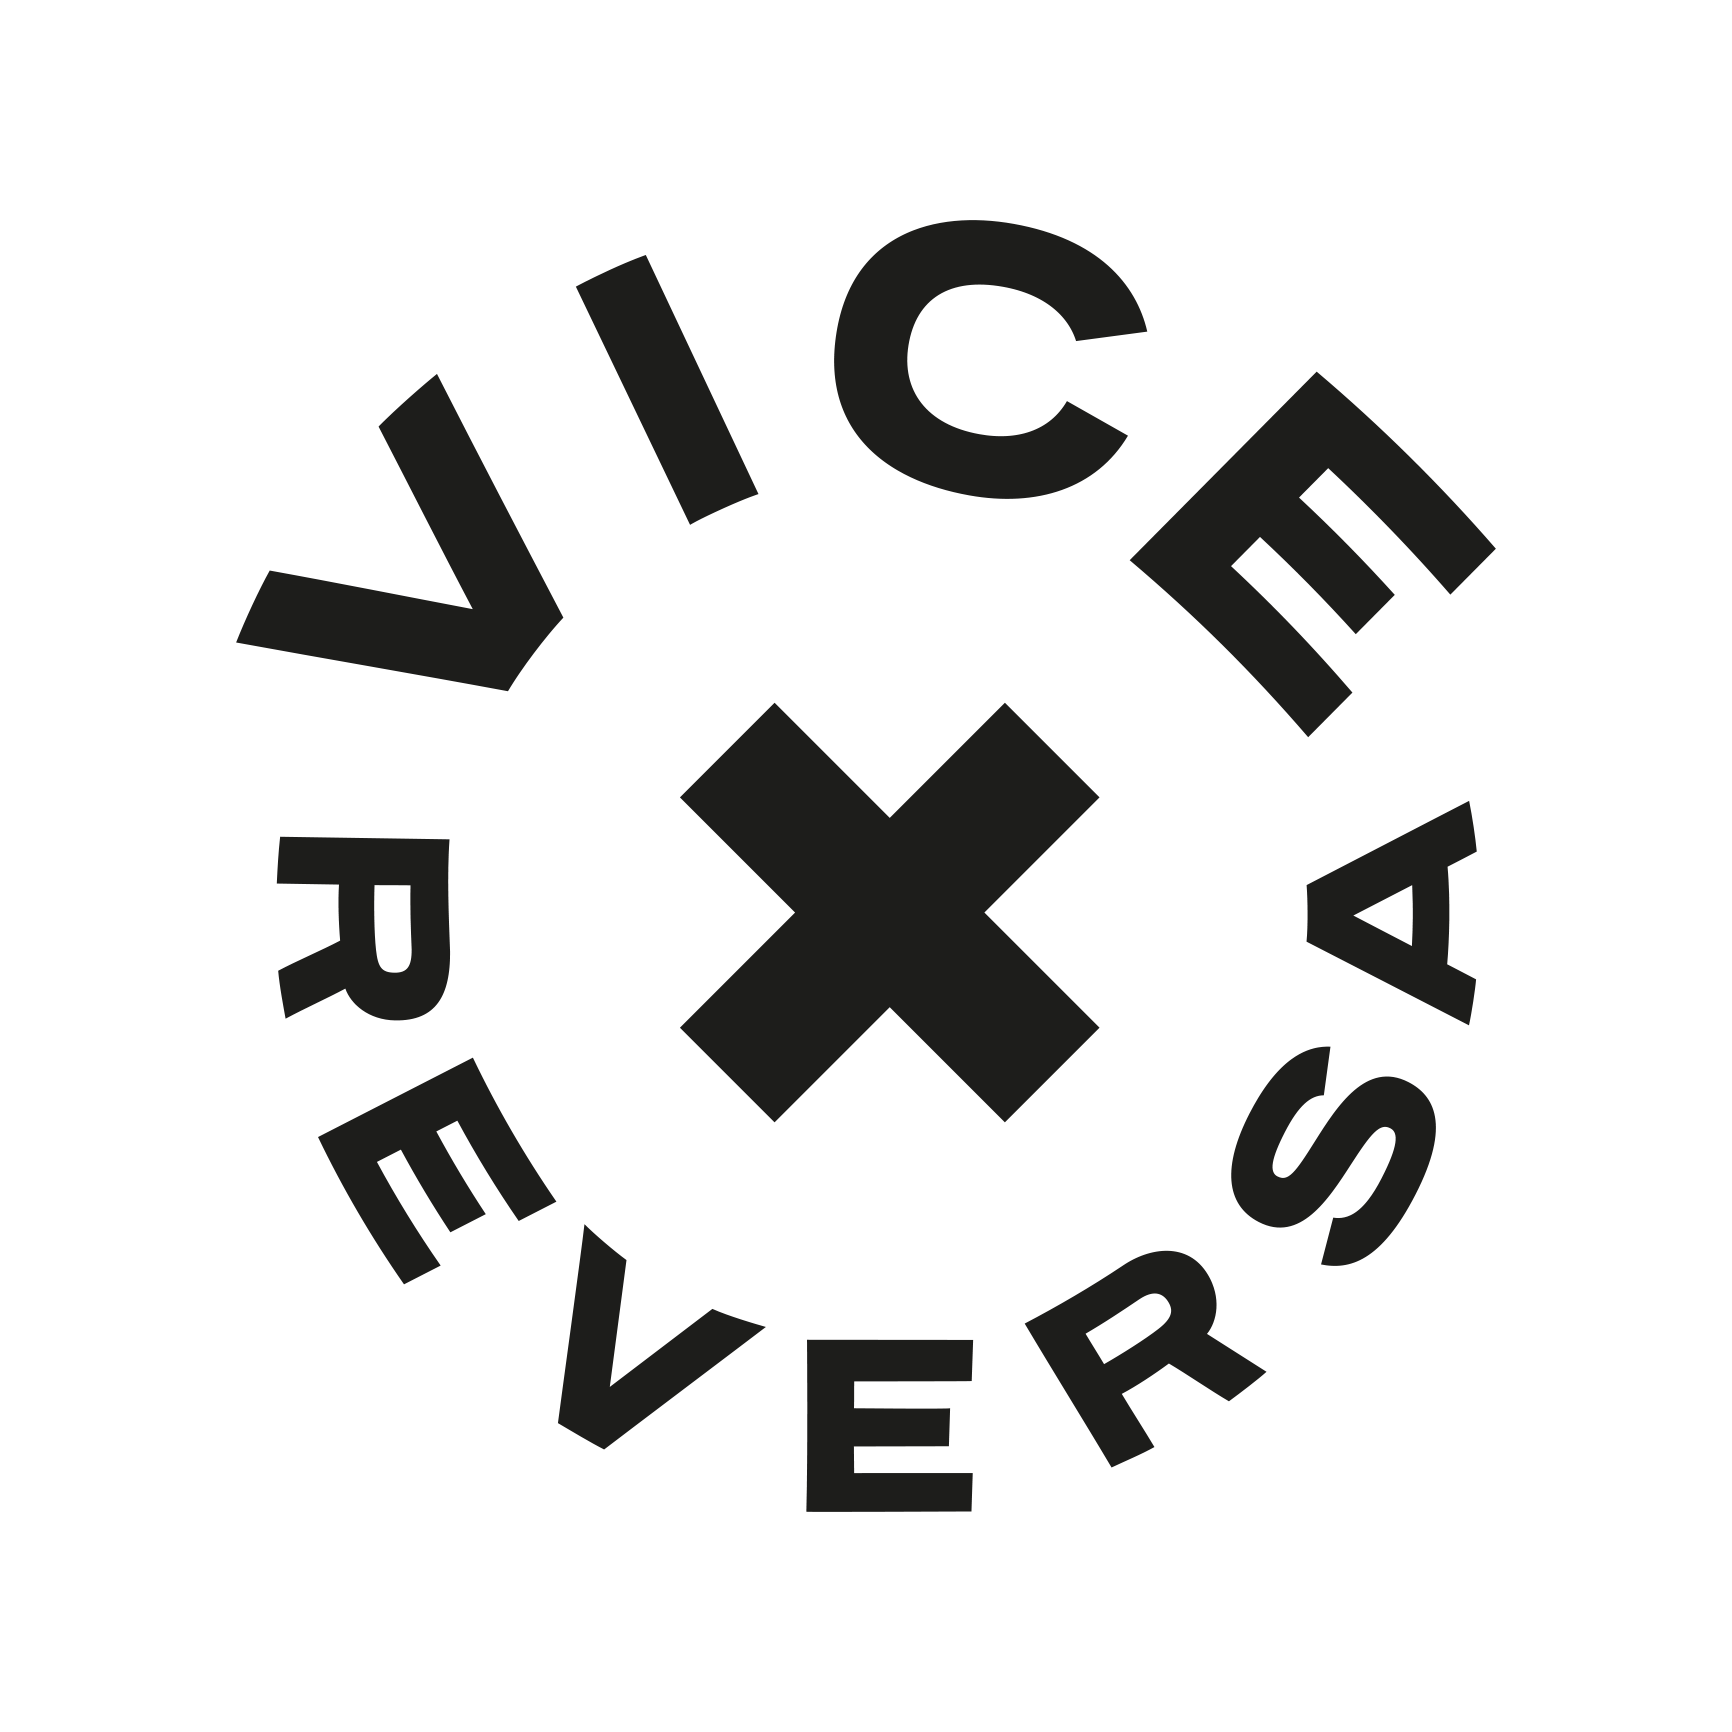 Vice Reversa logo